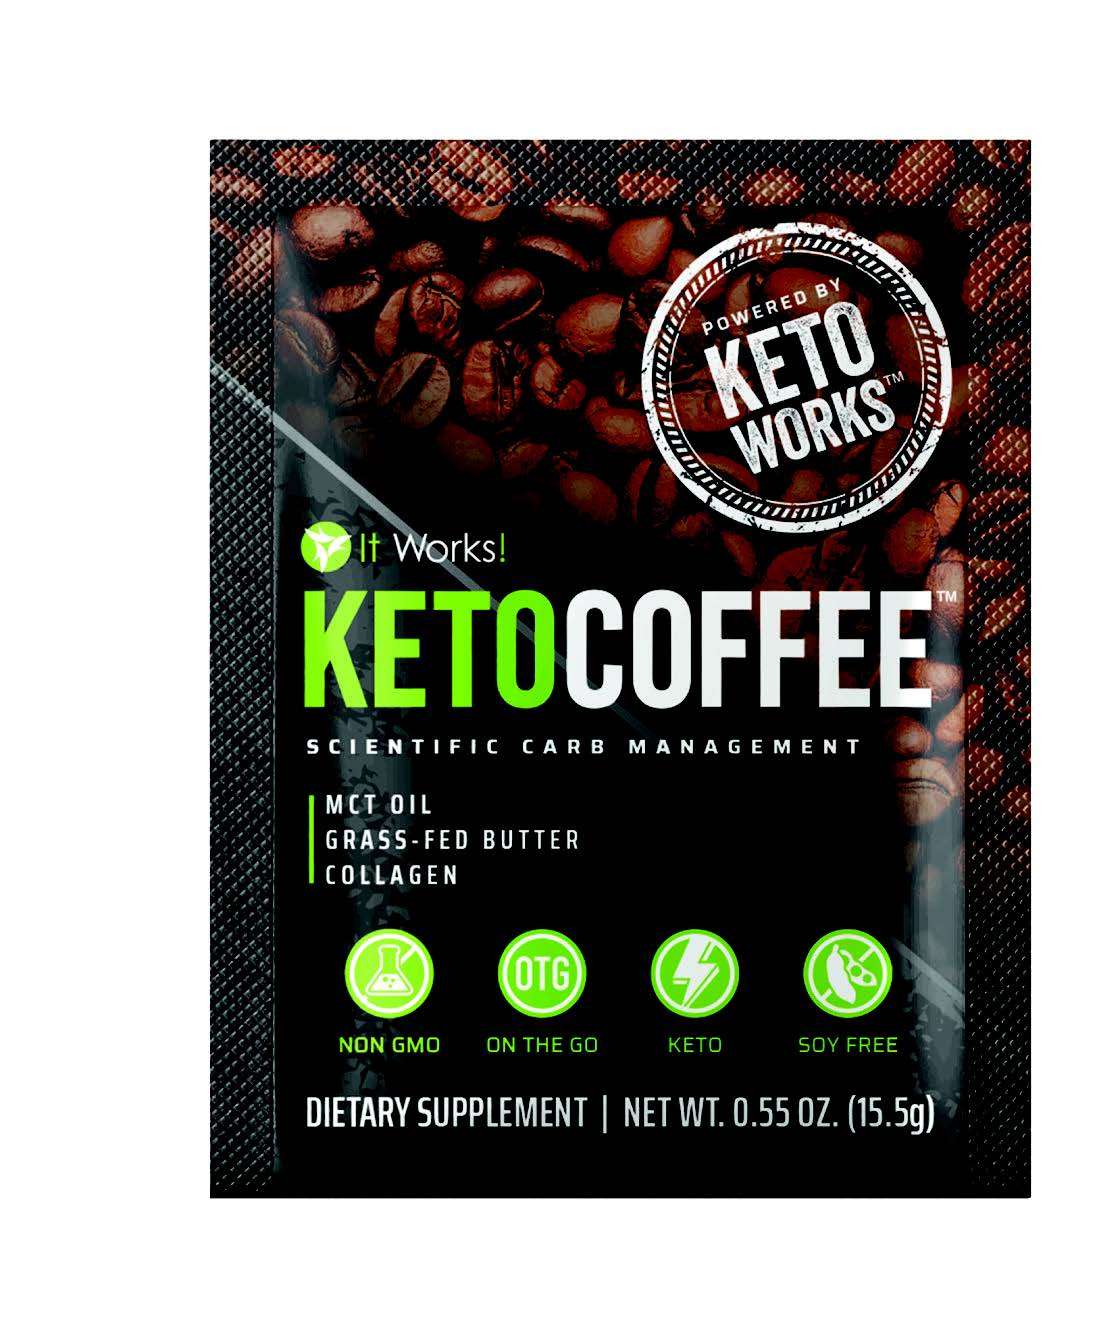 It Works! Keto Coffee